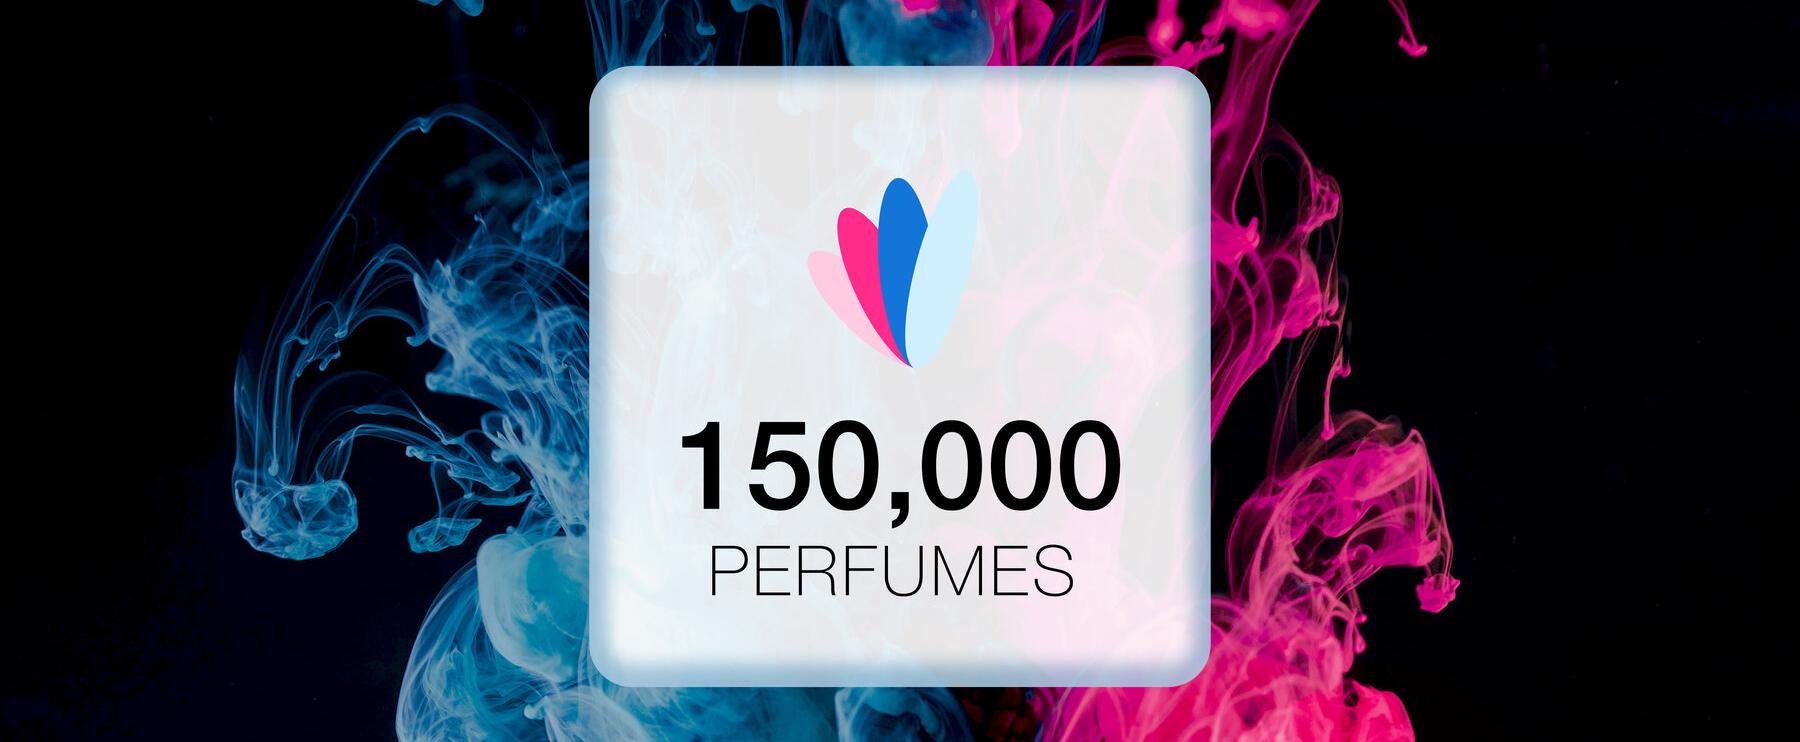 150,000 perfumes - We celebrate a new milestone!